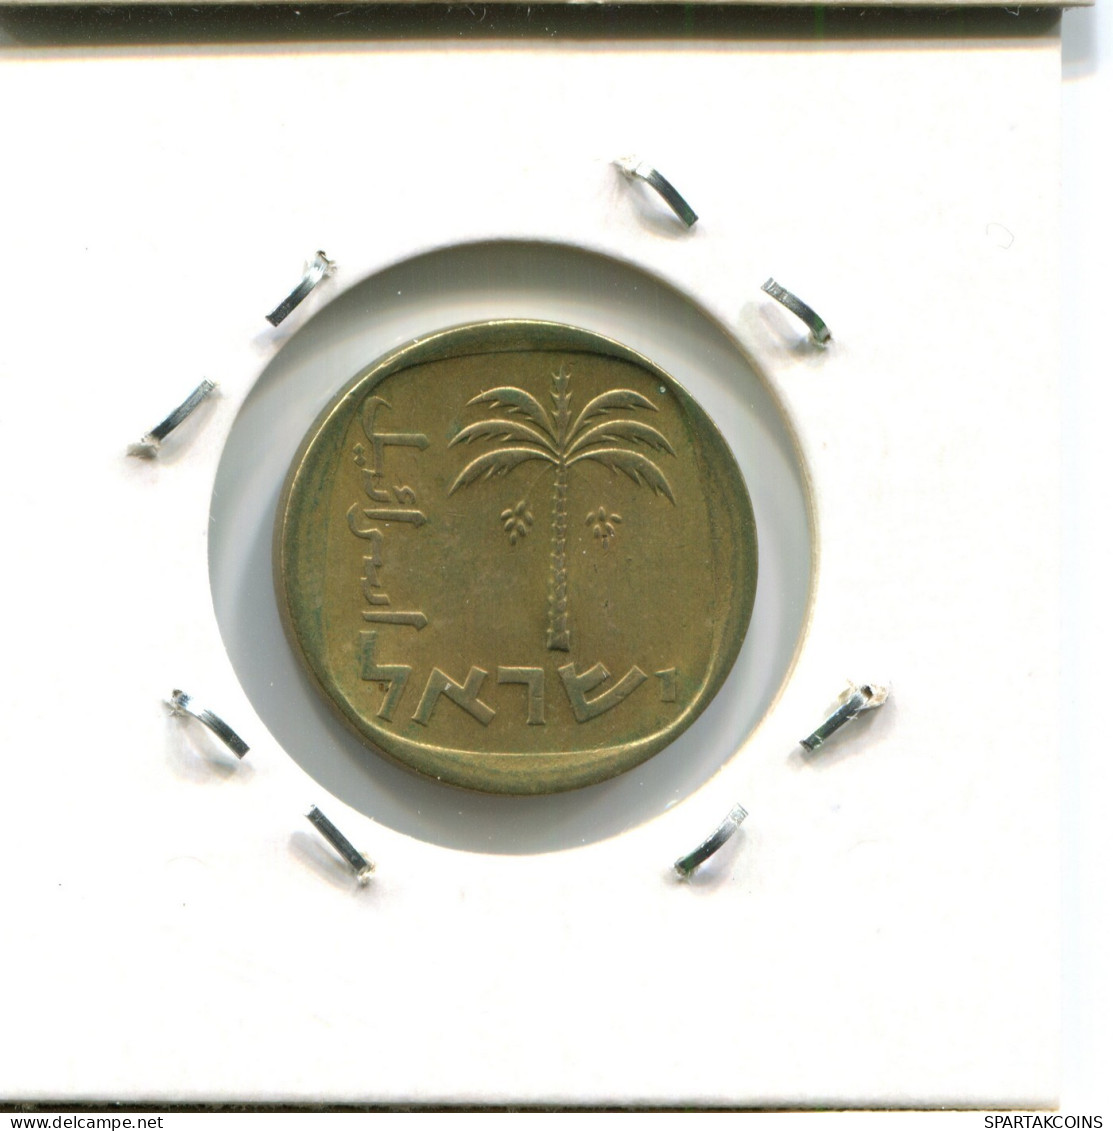 10 AGOROT 1975 ISRAEL Moneda #AW738.E.A - Israël